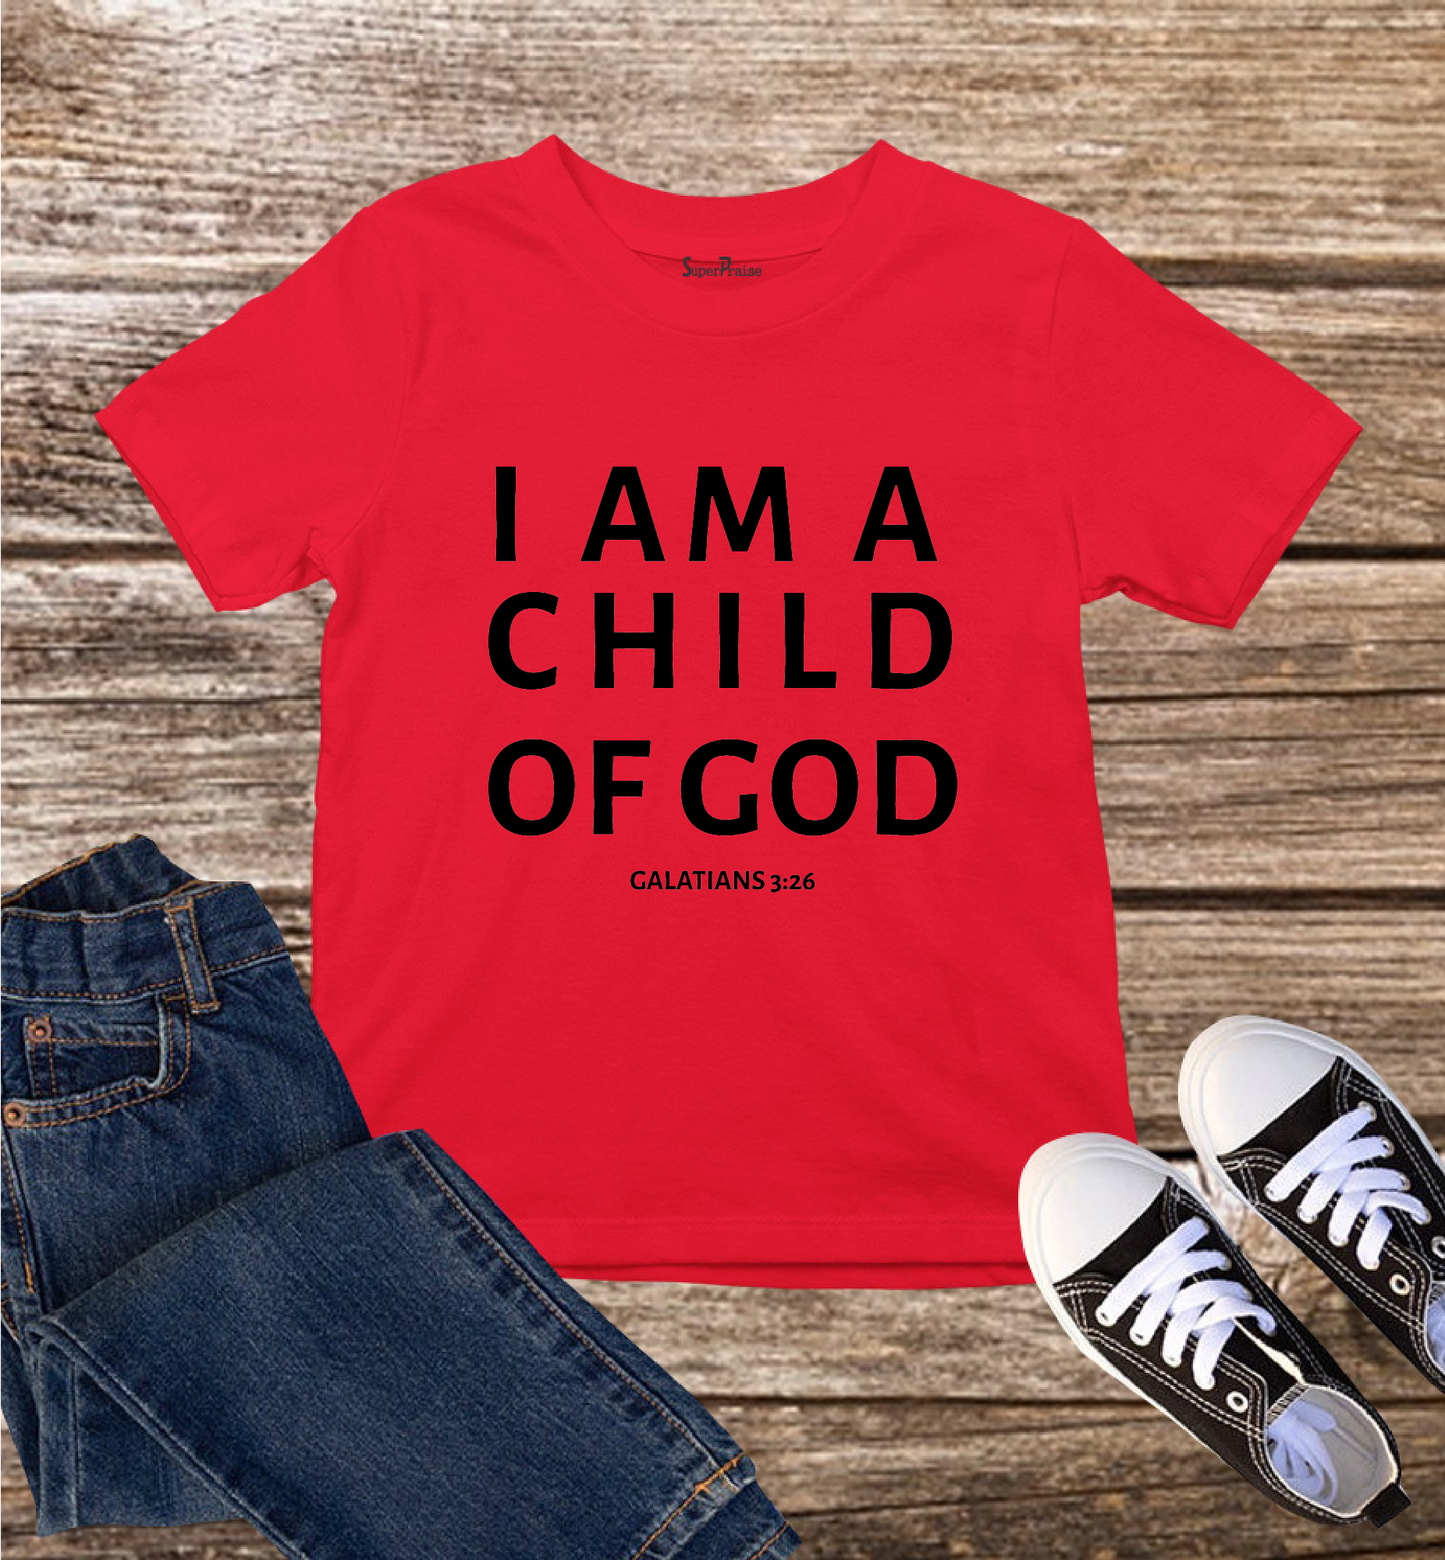 I Am a Child of God Kids Christian T Shirts